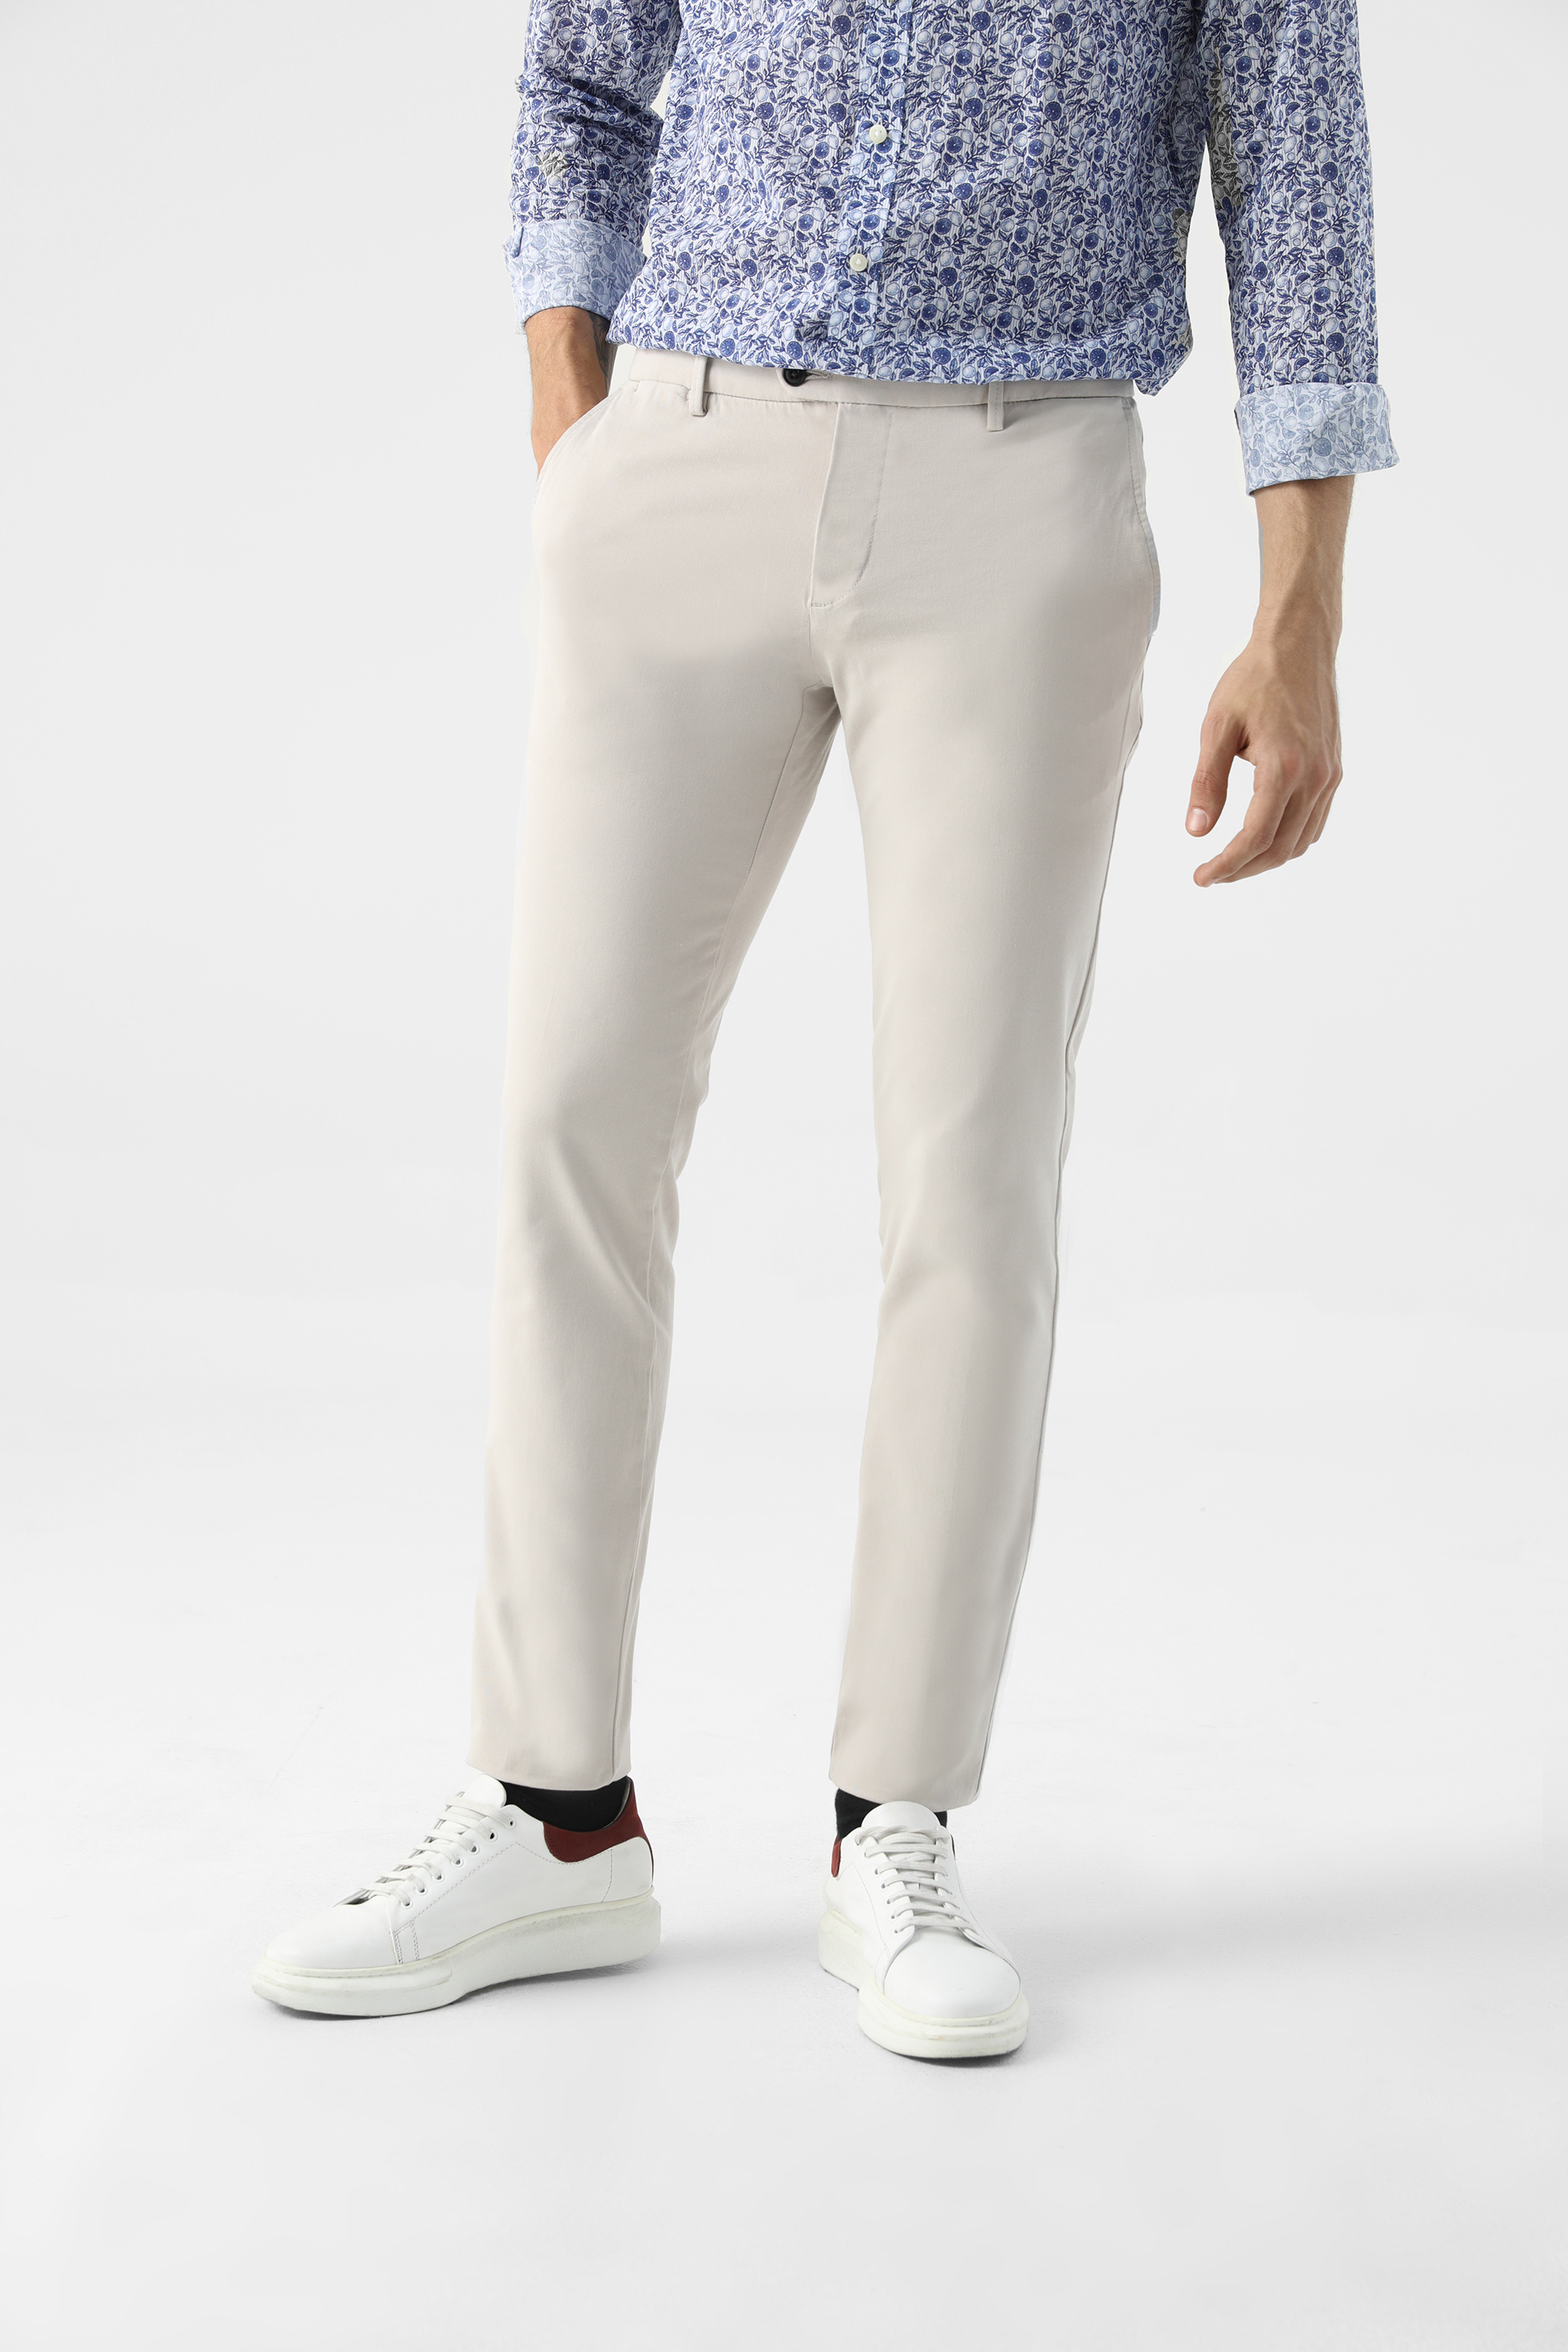 Damat Tween Damat Slim Fit Taş Chino Pantolon. 1